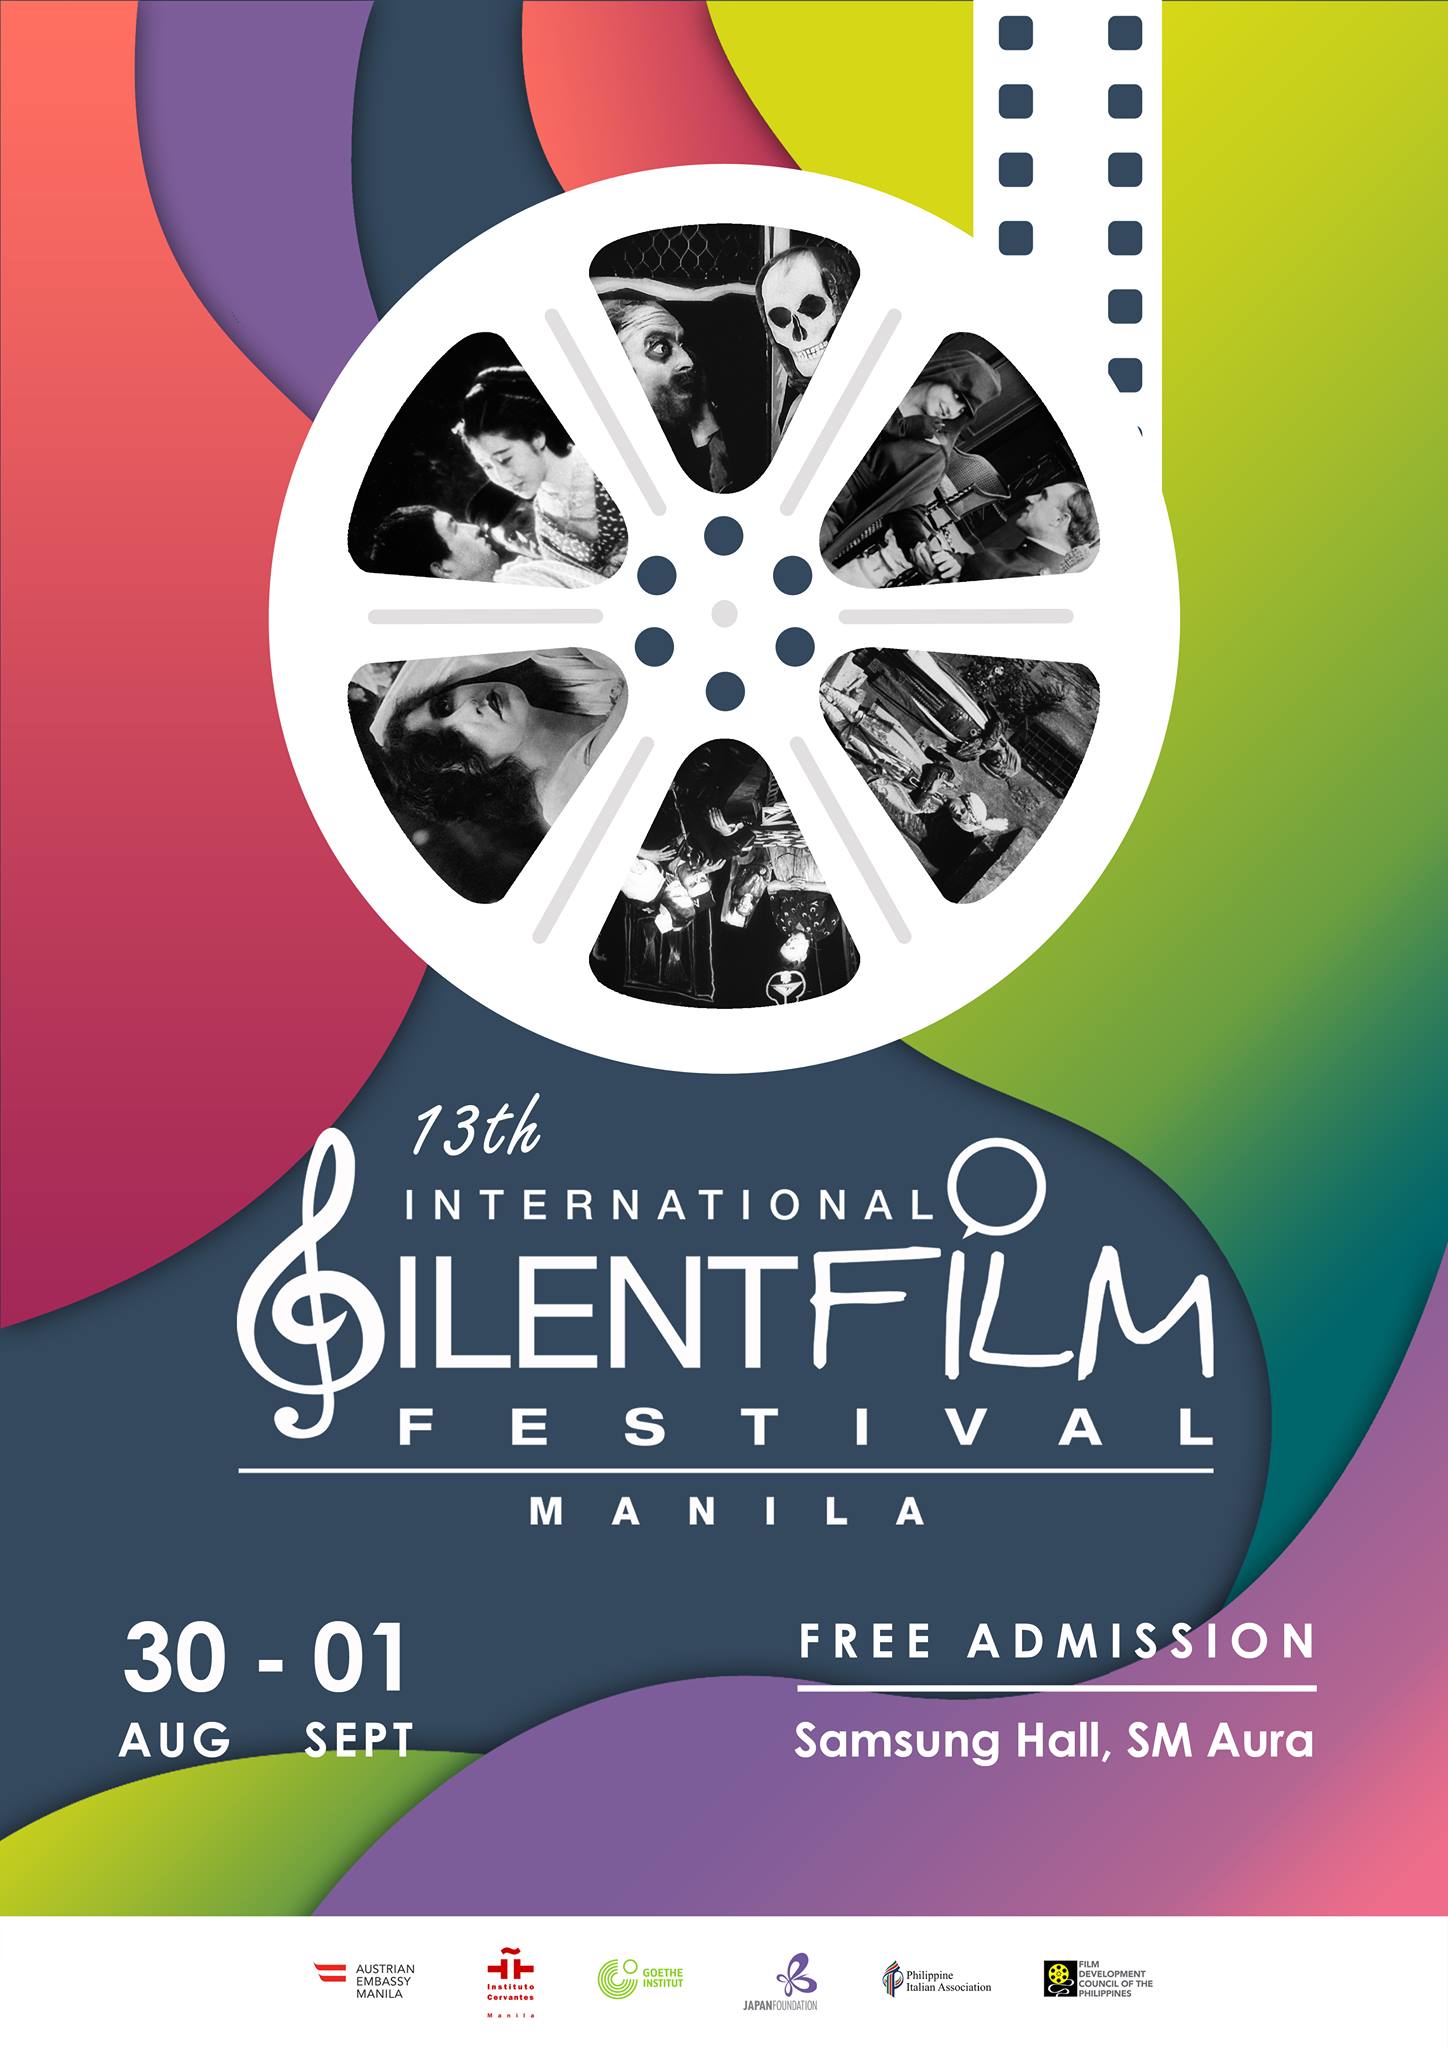 13th International Silent Film Festival Agimat Sining at Kulturang Pinoy